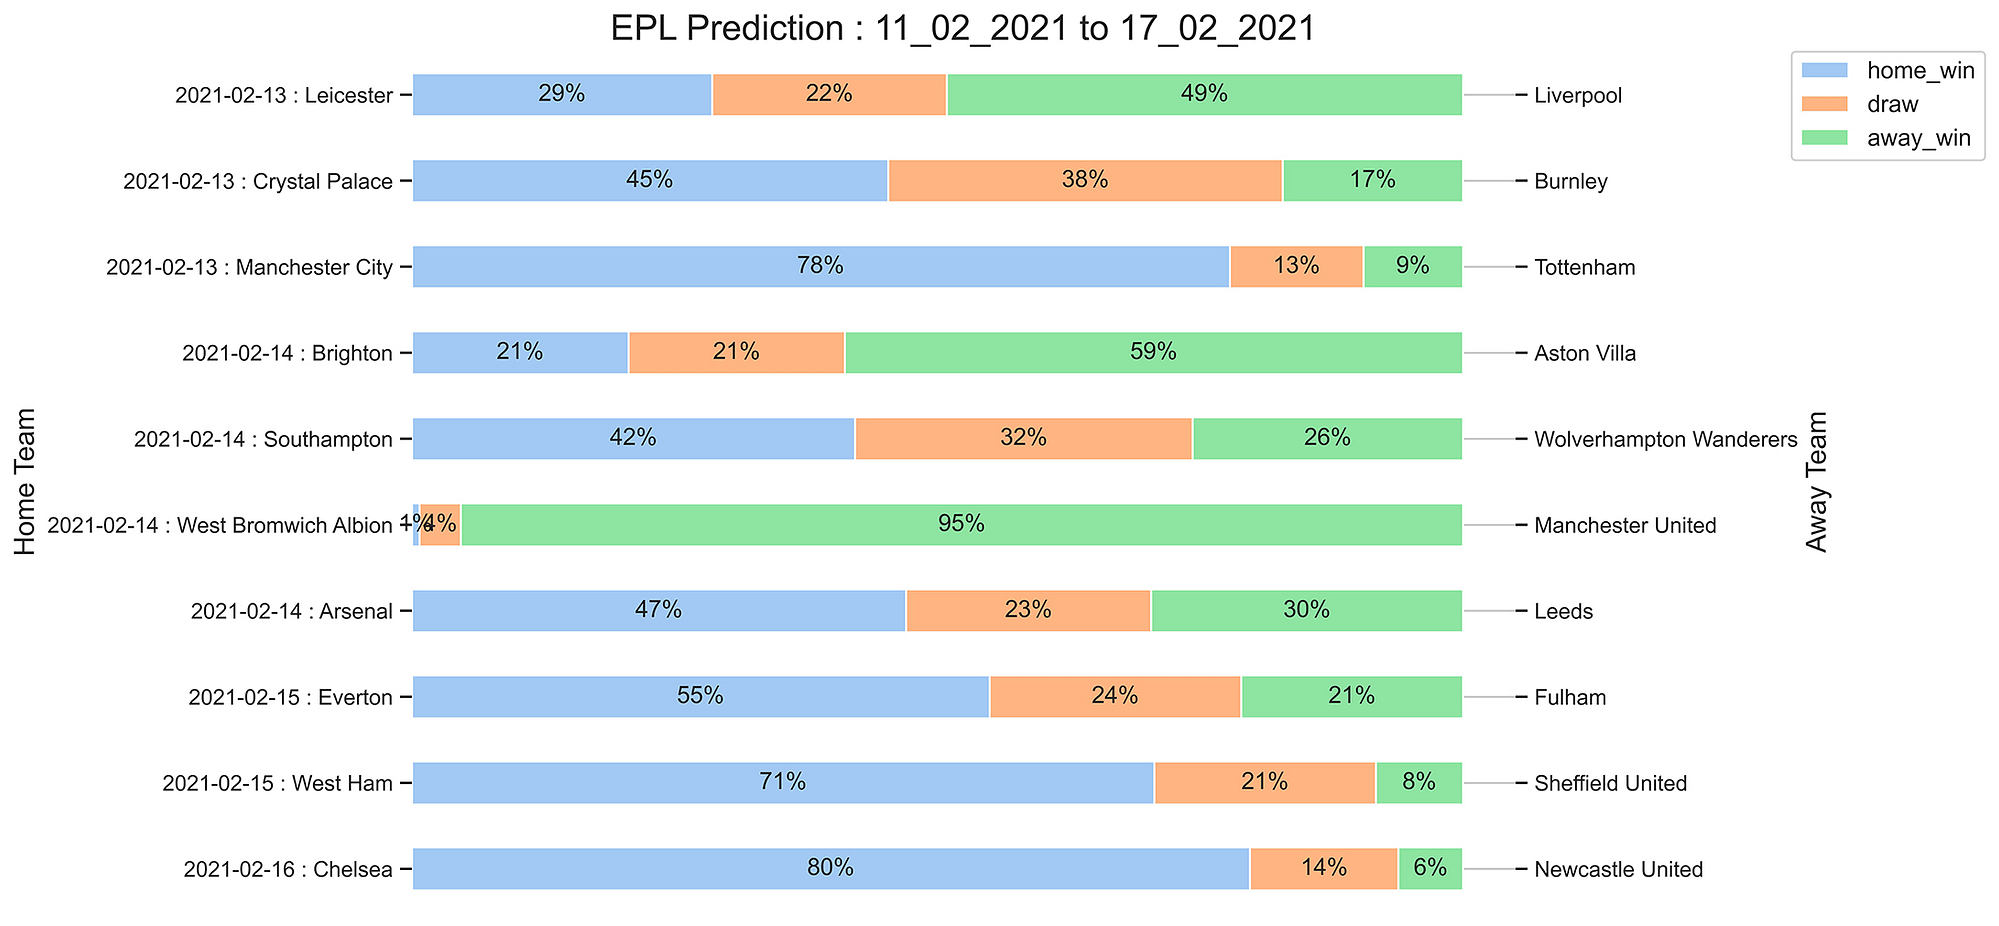 EPL_Prediction 11_02_2021